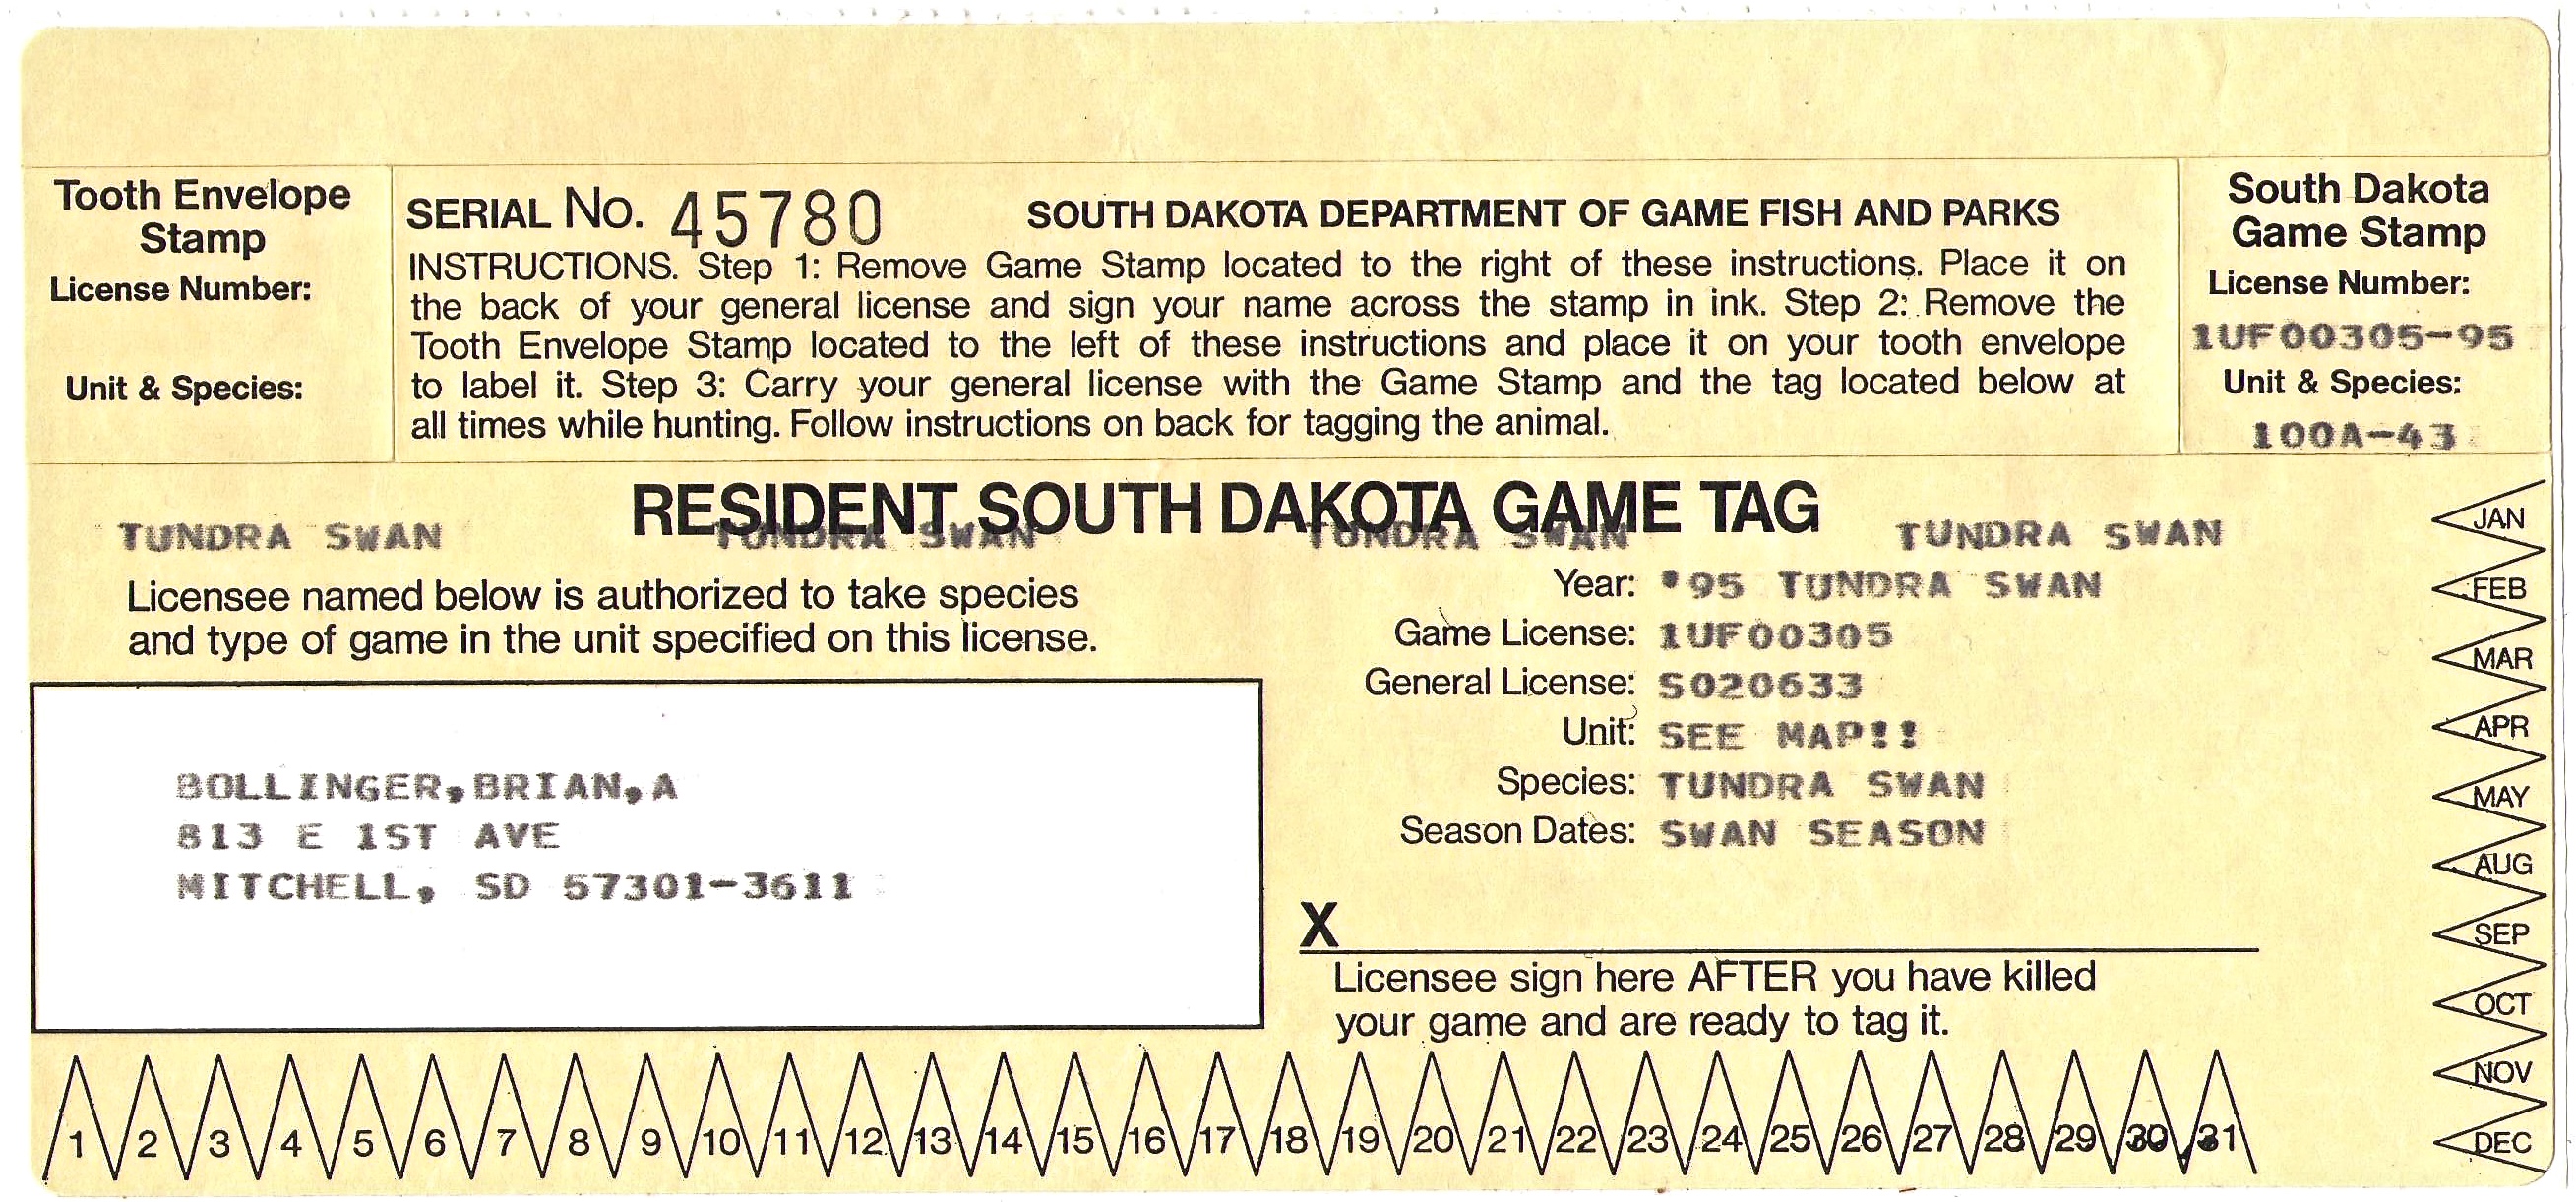 1995 South Dakota Tunra Swan, Tag and Tooth Envelope Stamp